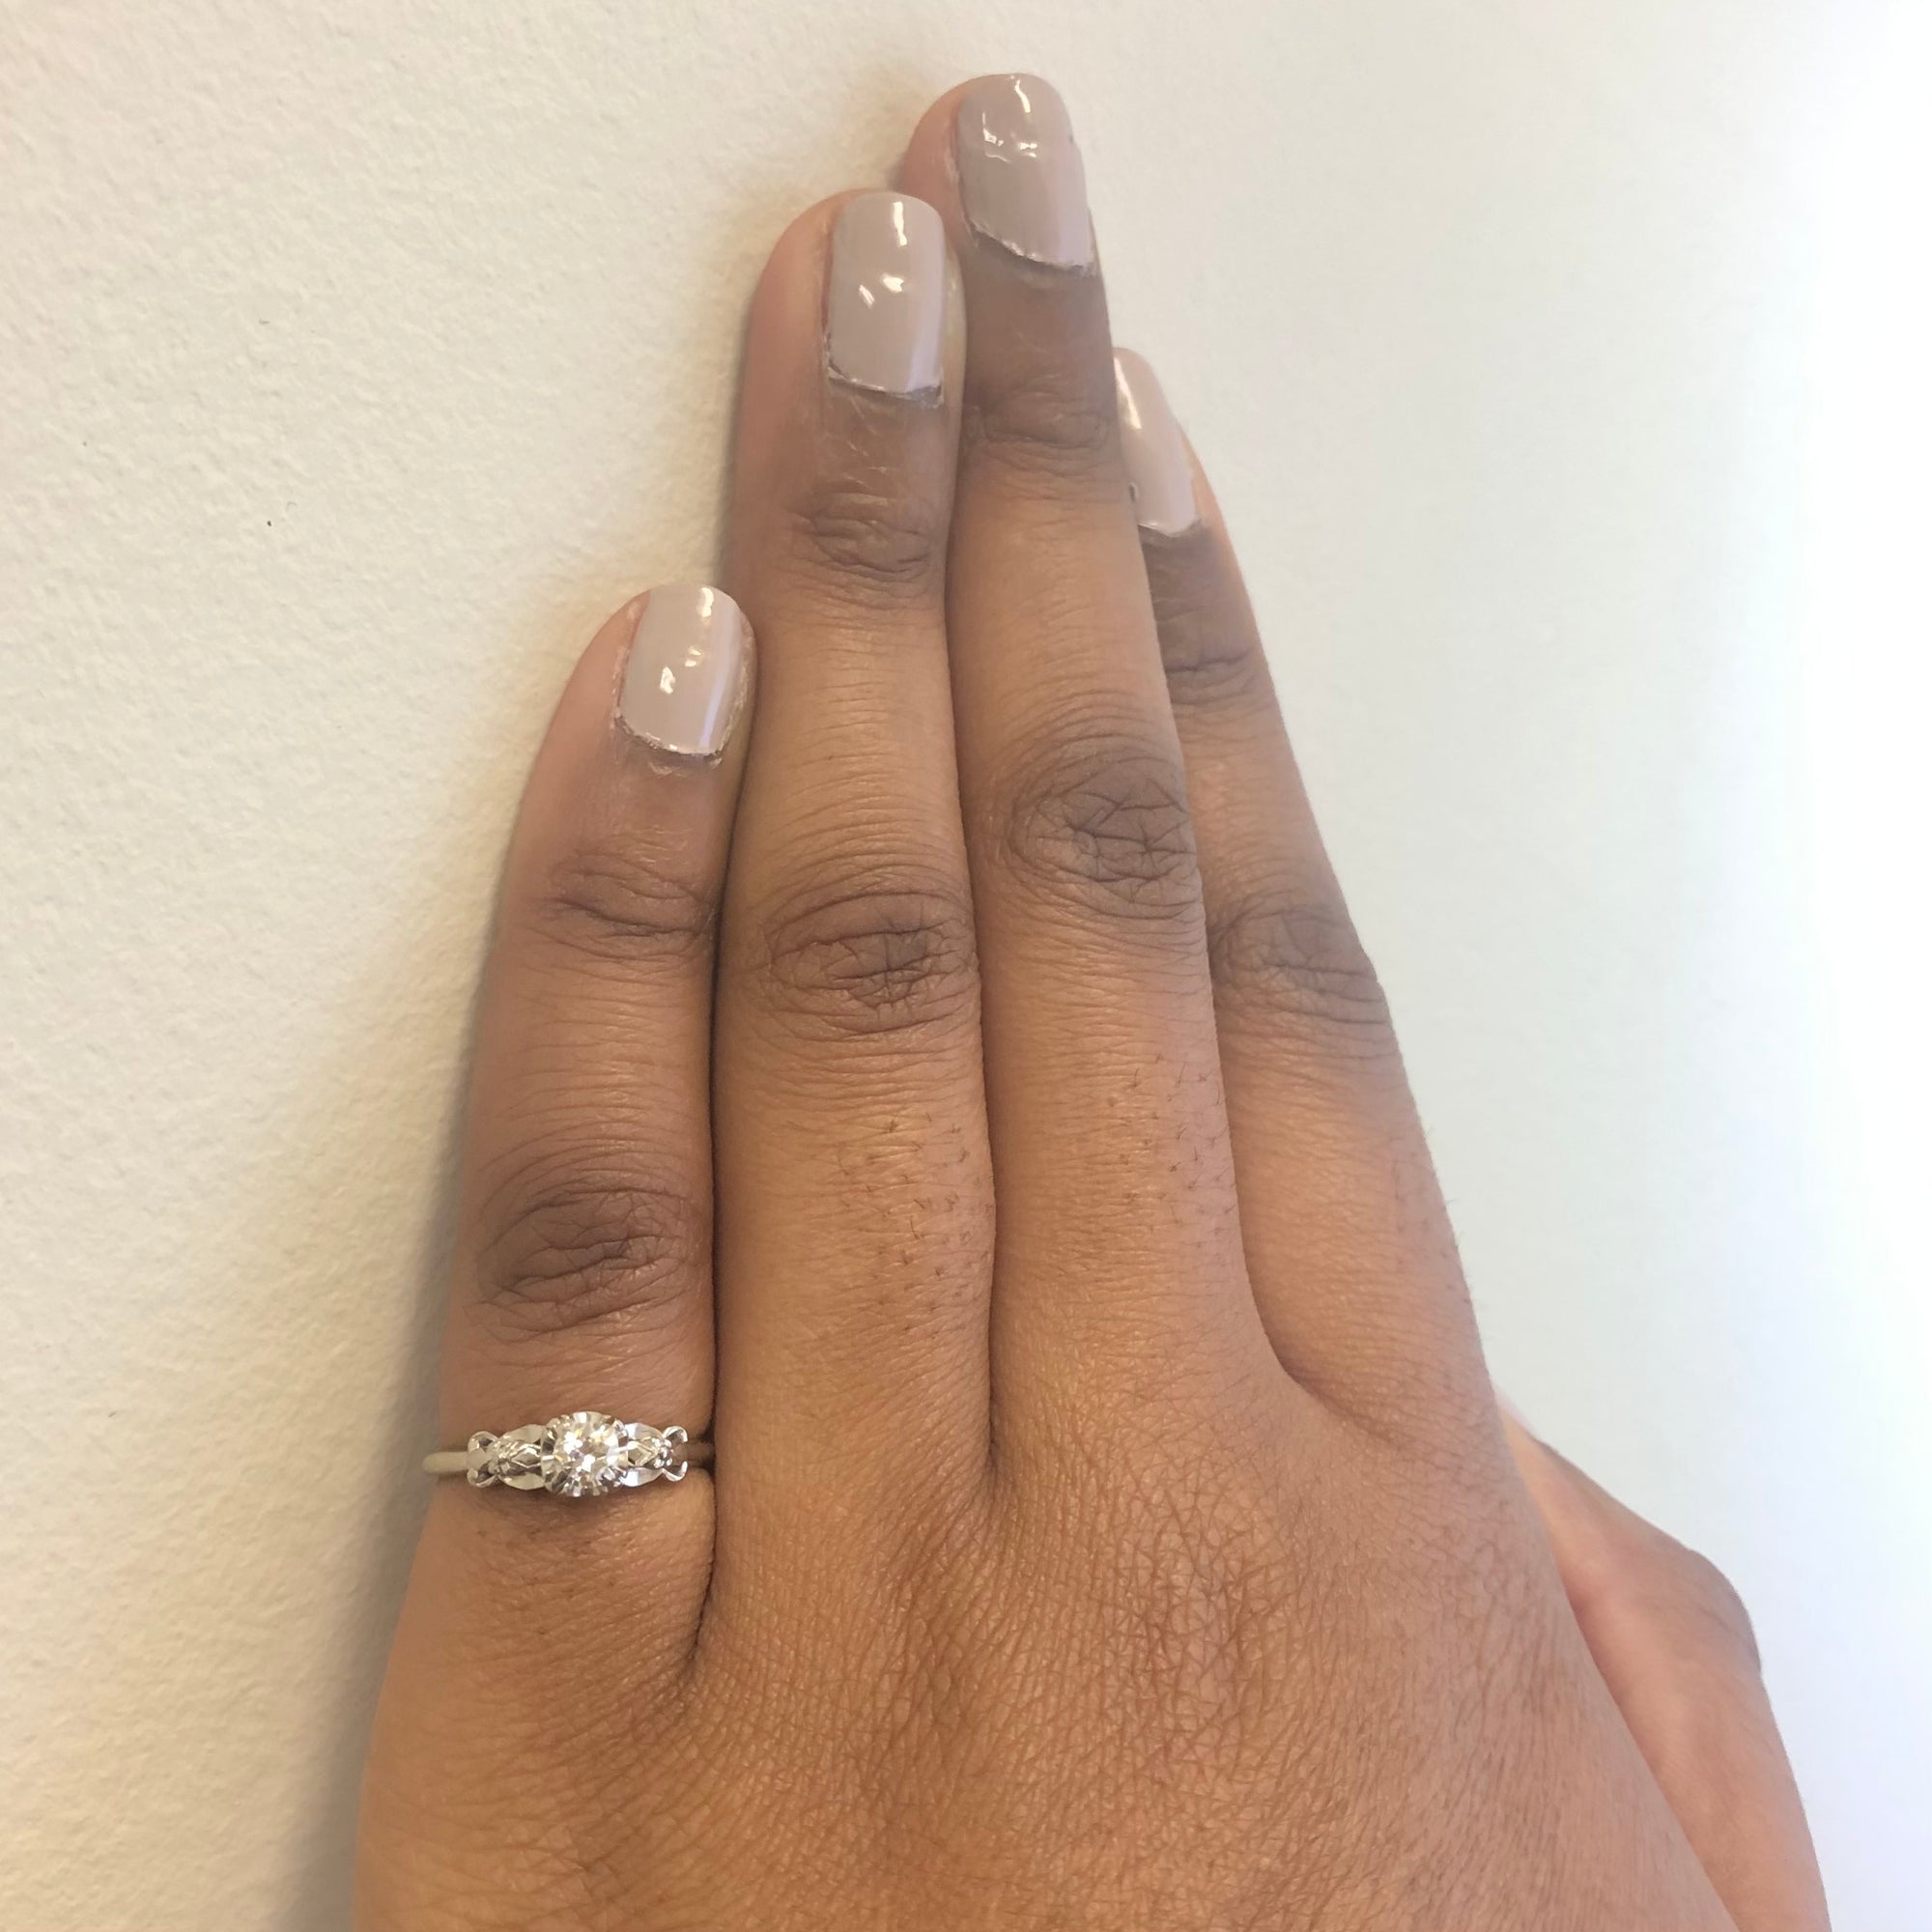 1940s Diamond Wedding Ring Set | 0.24ctw | SZ 5.75 |